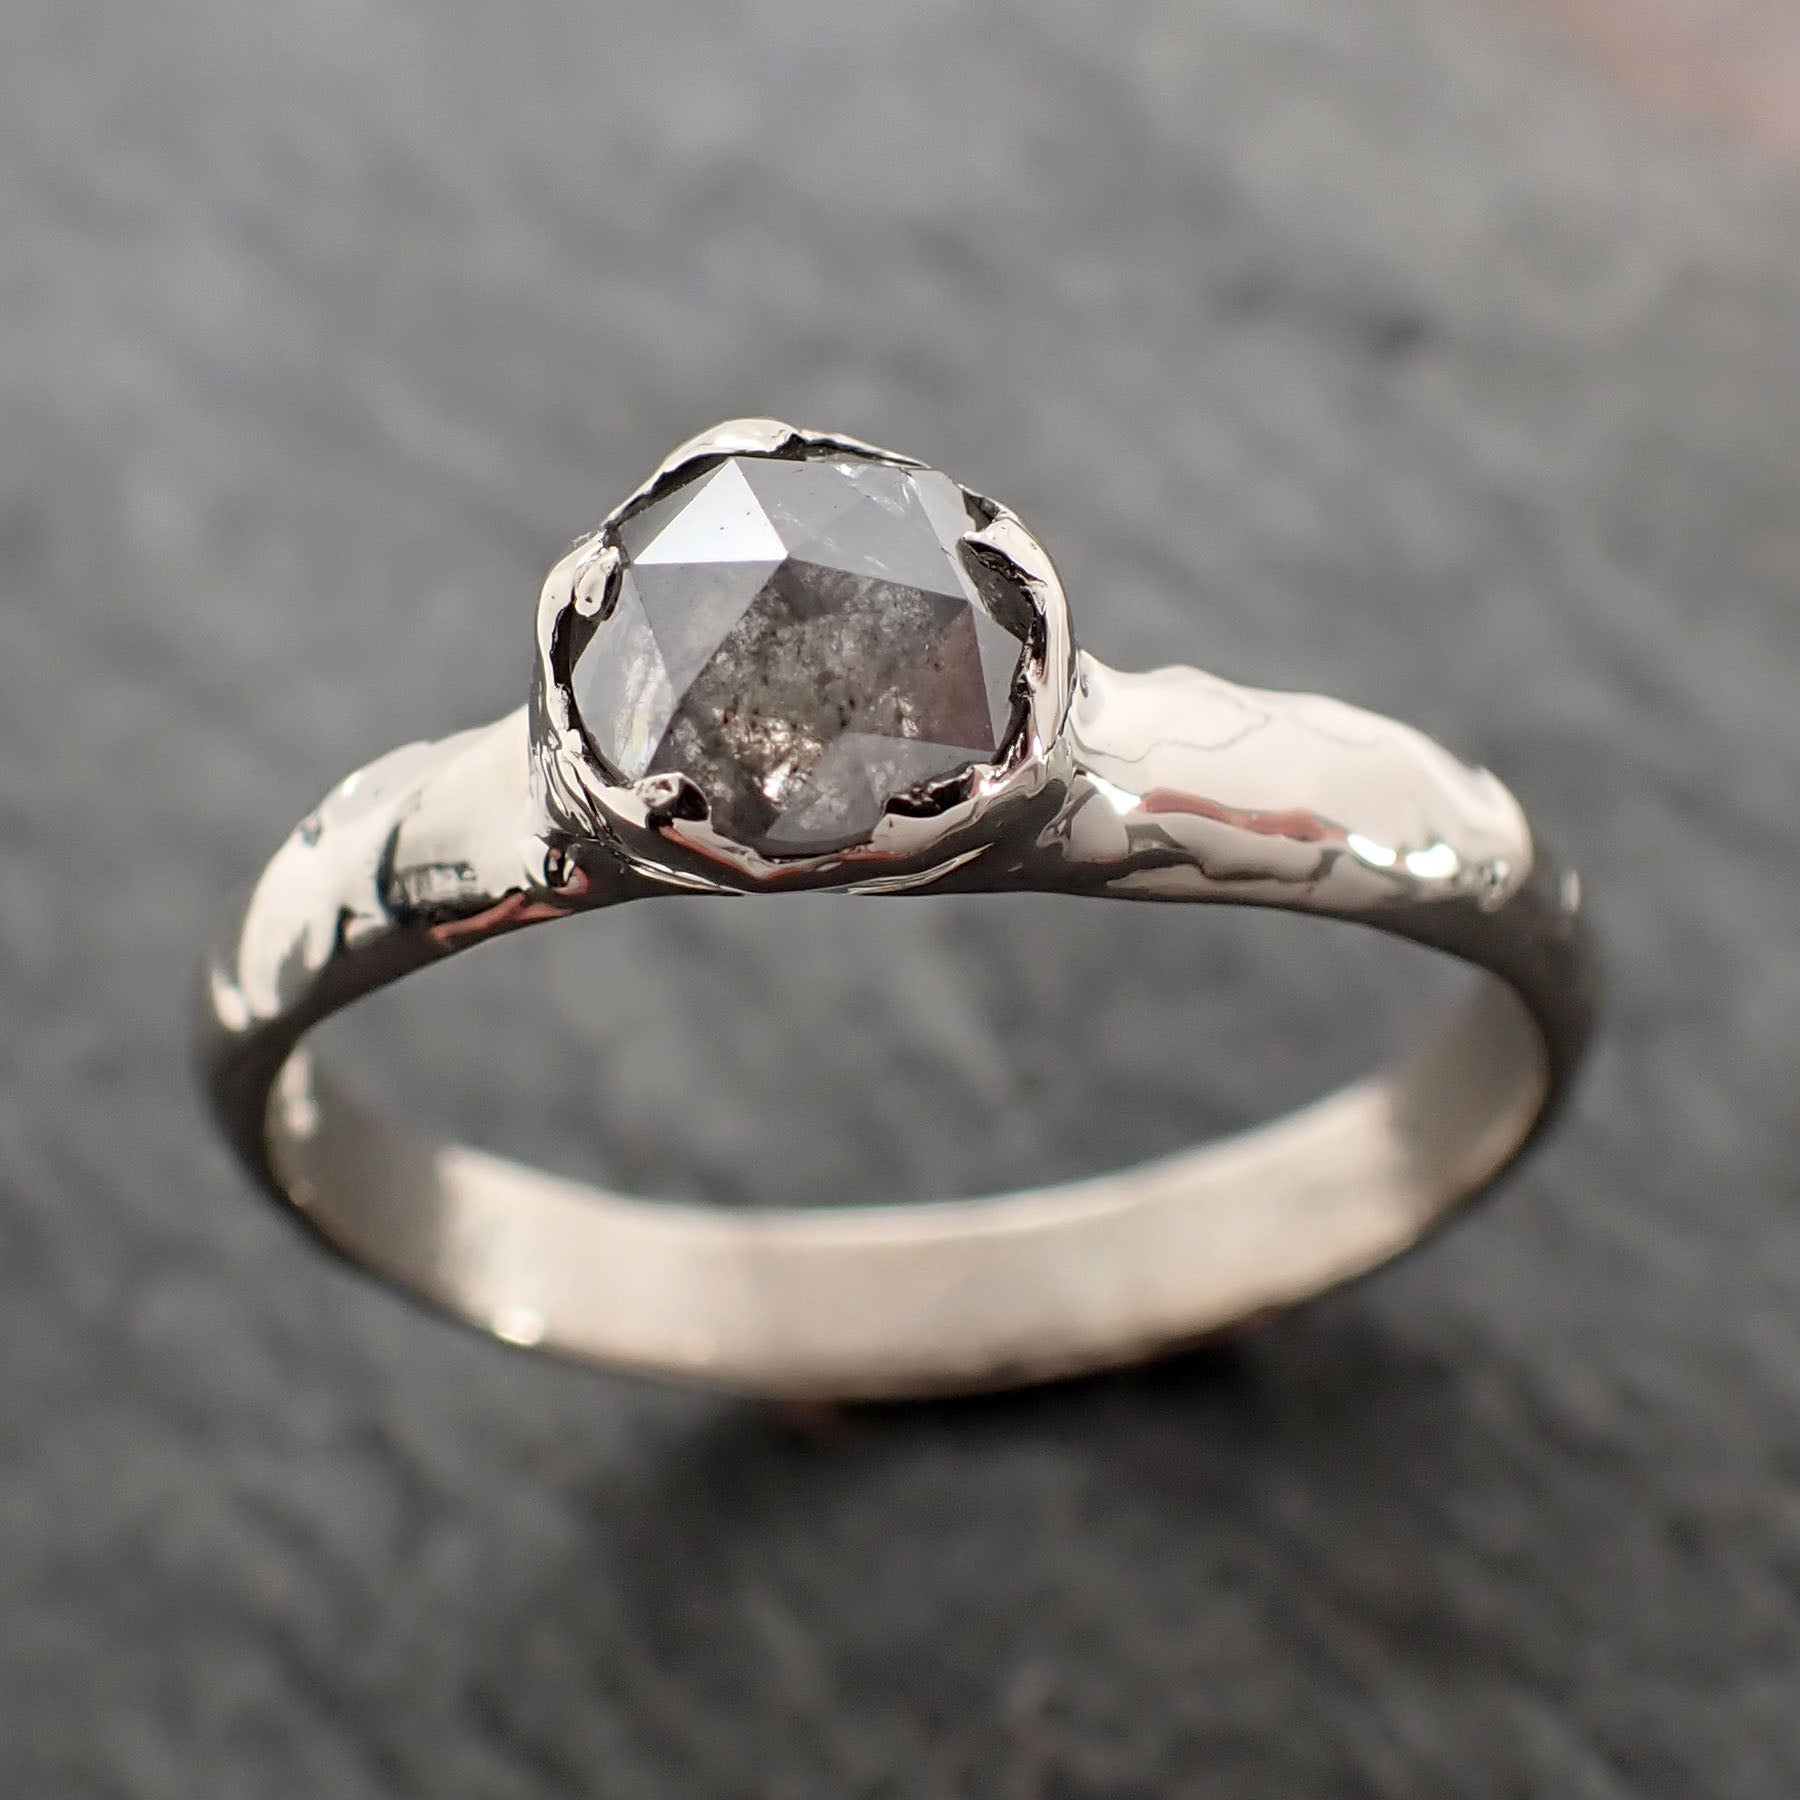 Fancy cut salt pepper Diamond Solitaire Engagement 14k White Gold Wedding Ring byAngeline 2865